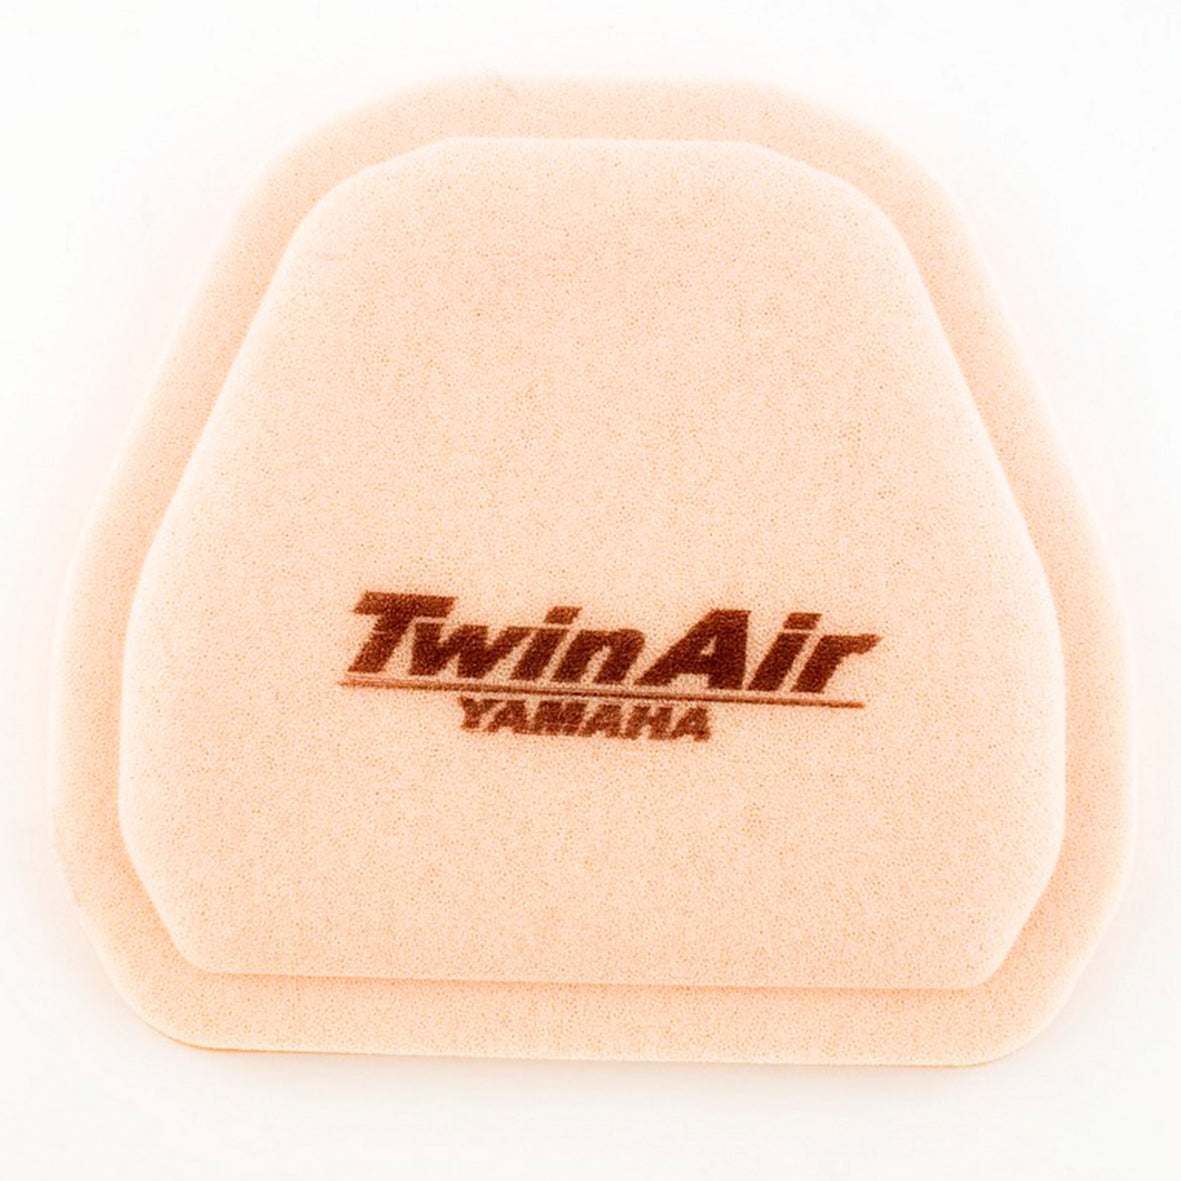 Twin Air Foam Air Filter - 152216 (Yamaha YZ 450 F '10-'13)